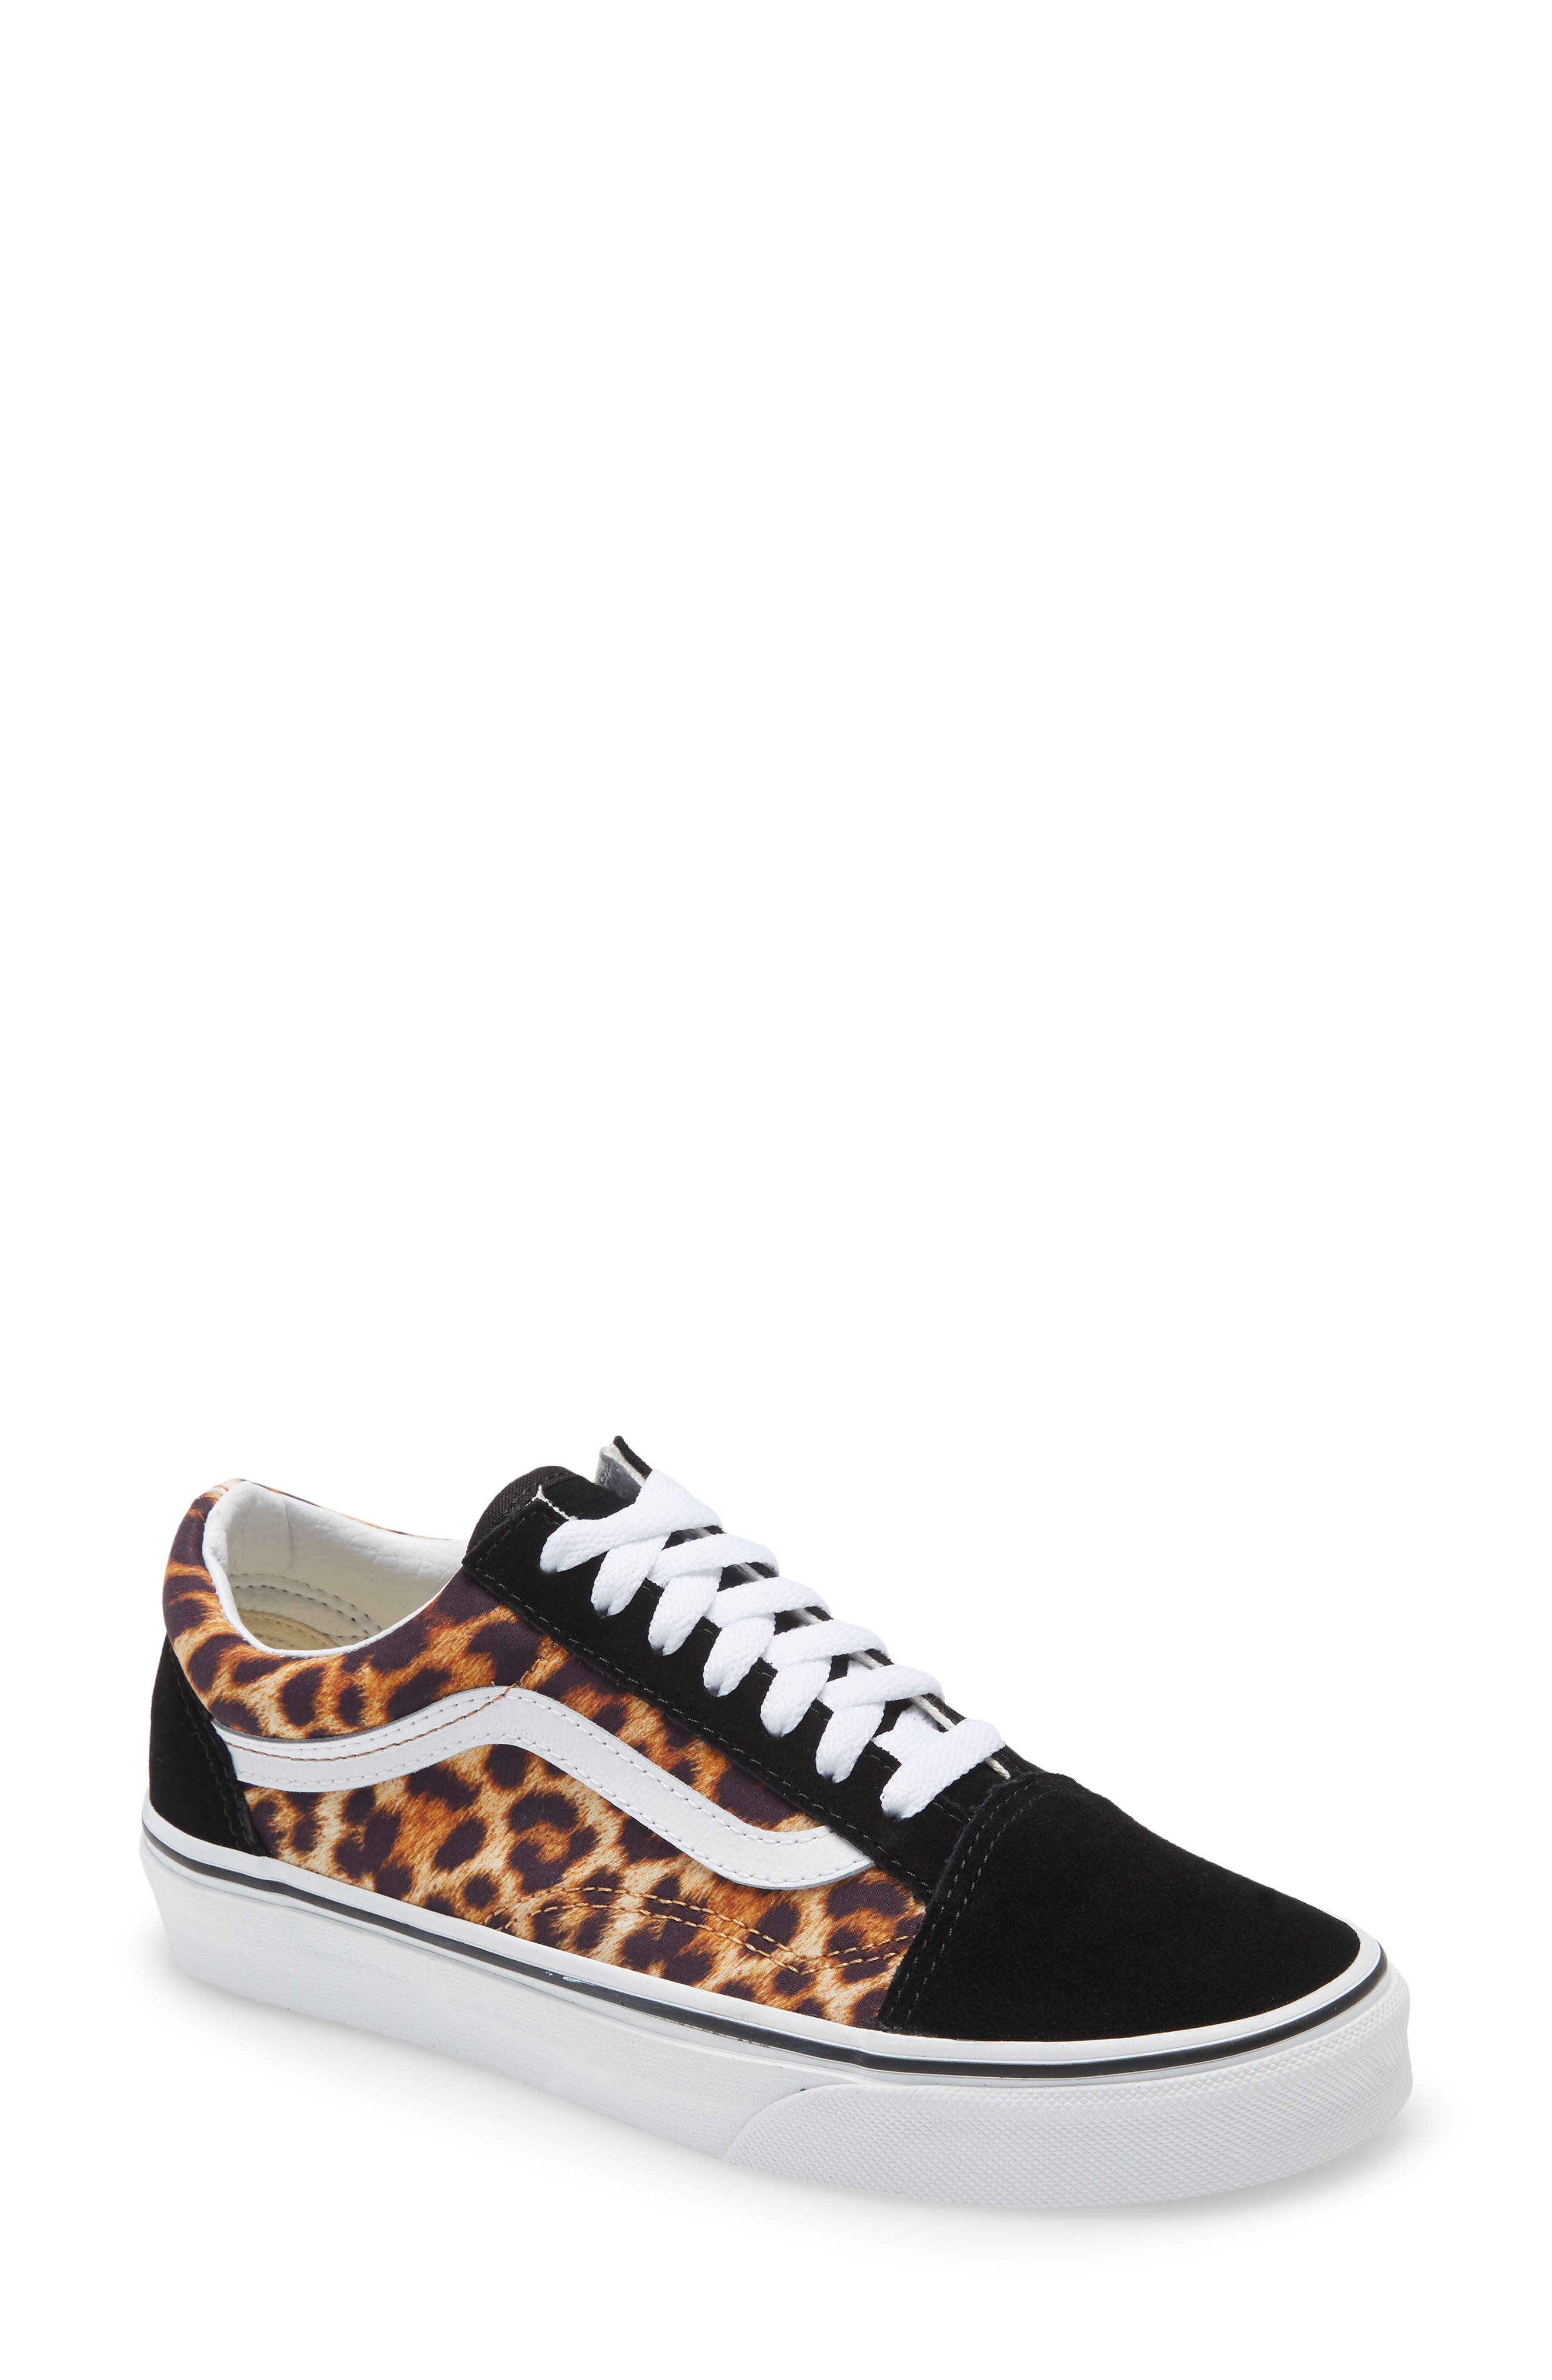 Vans Old Skool Leopard Sneaker (Women 